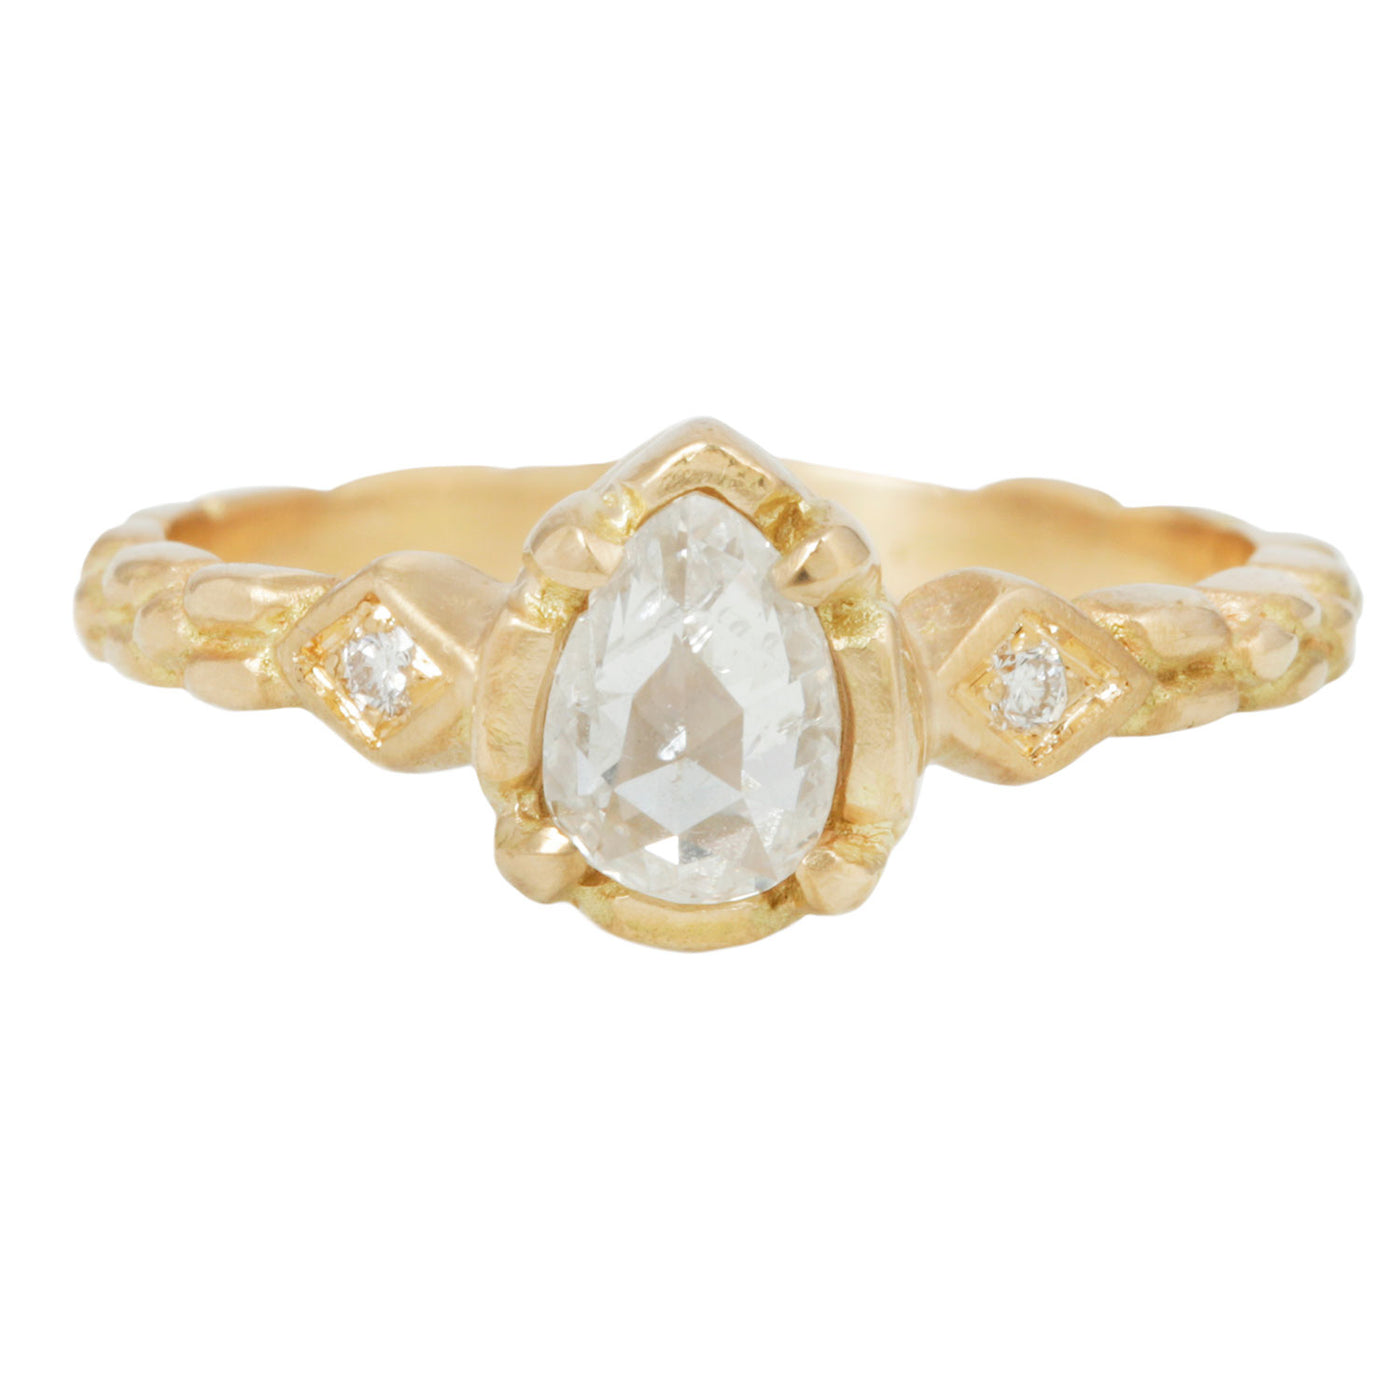 Majestic Pear Diamond Ring